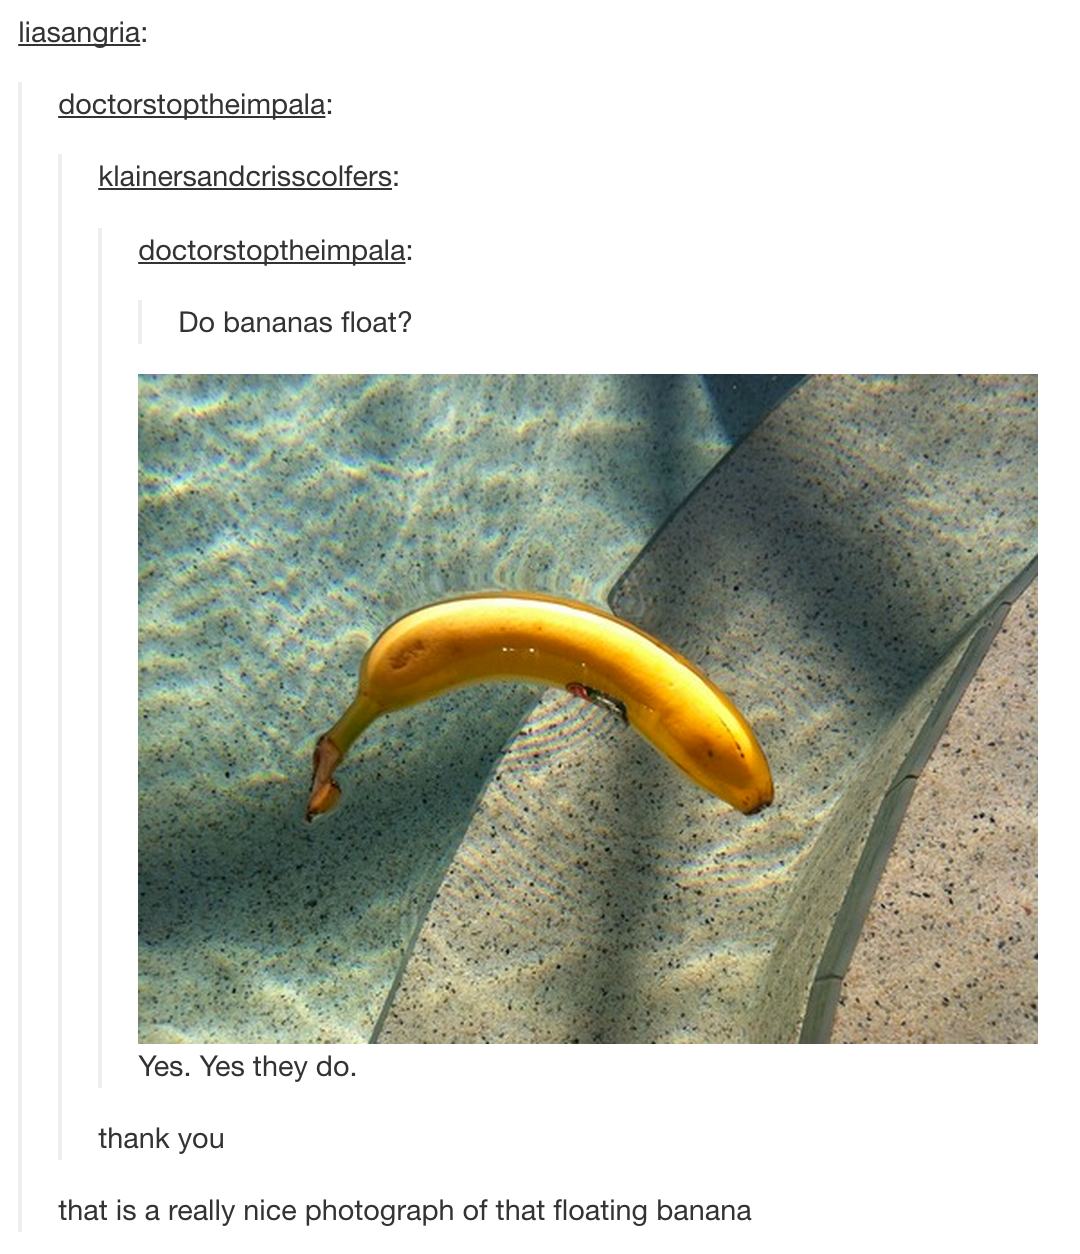 tumblr - do bananas float - liasangria doctorstoptheimpala klainersandcrisscolfers doctorstoptheimpala Do bananas float? Yes. Yes they do. thank you that is a really nice photograph of that floating banana